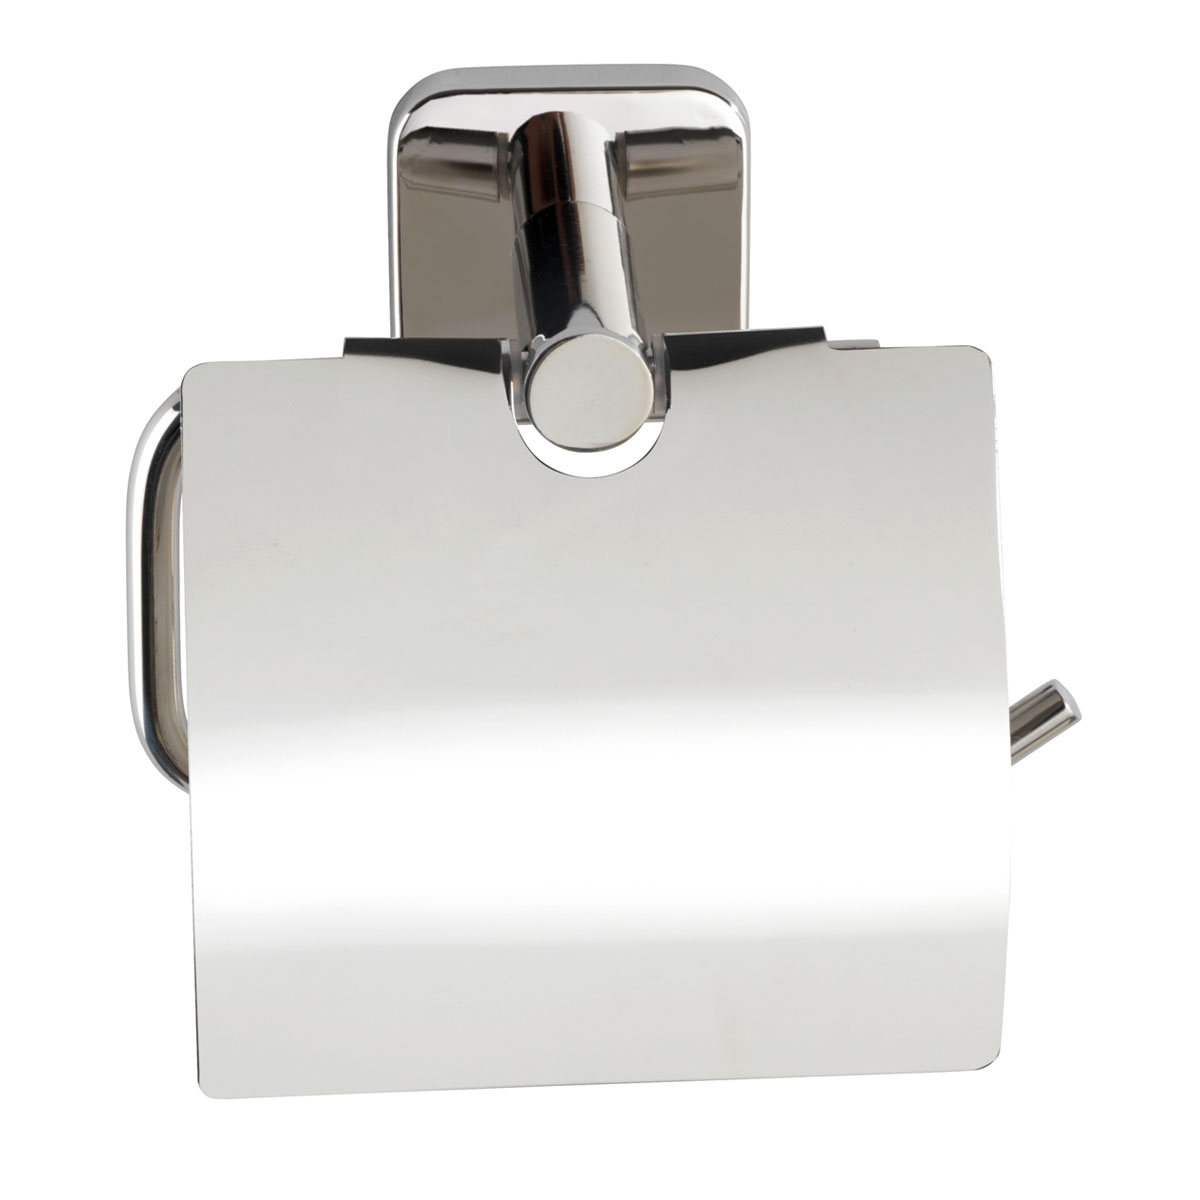 Wenko Toilettenpapierhalter Mezzano mit Deckel | 503632 | Handtuchstangen